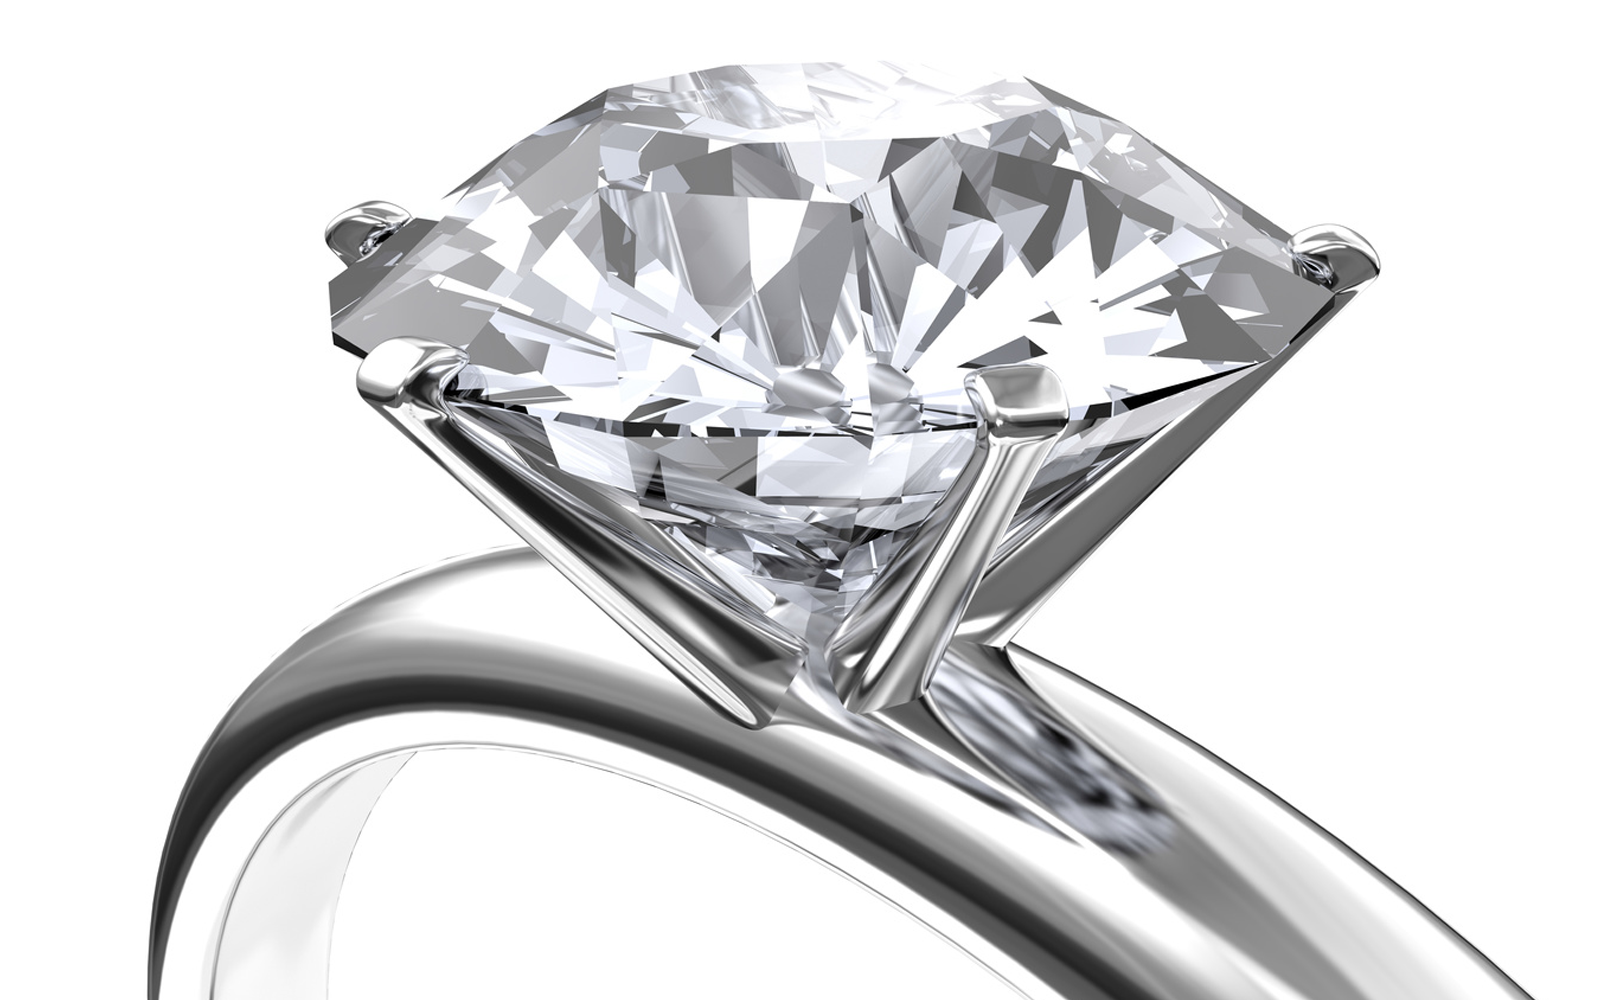 Diamond engagement ring trends 2021: Is bigger always better? Not always